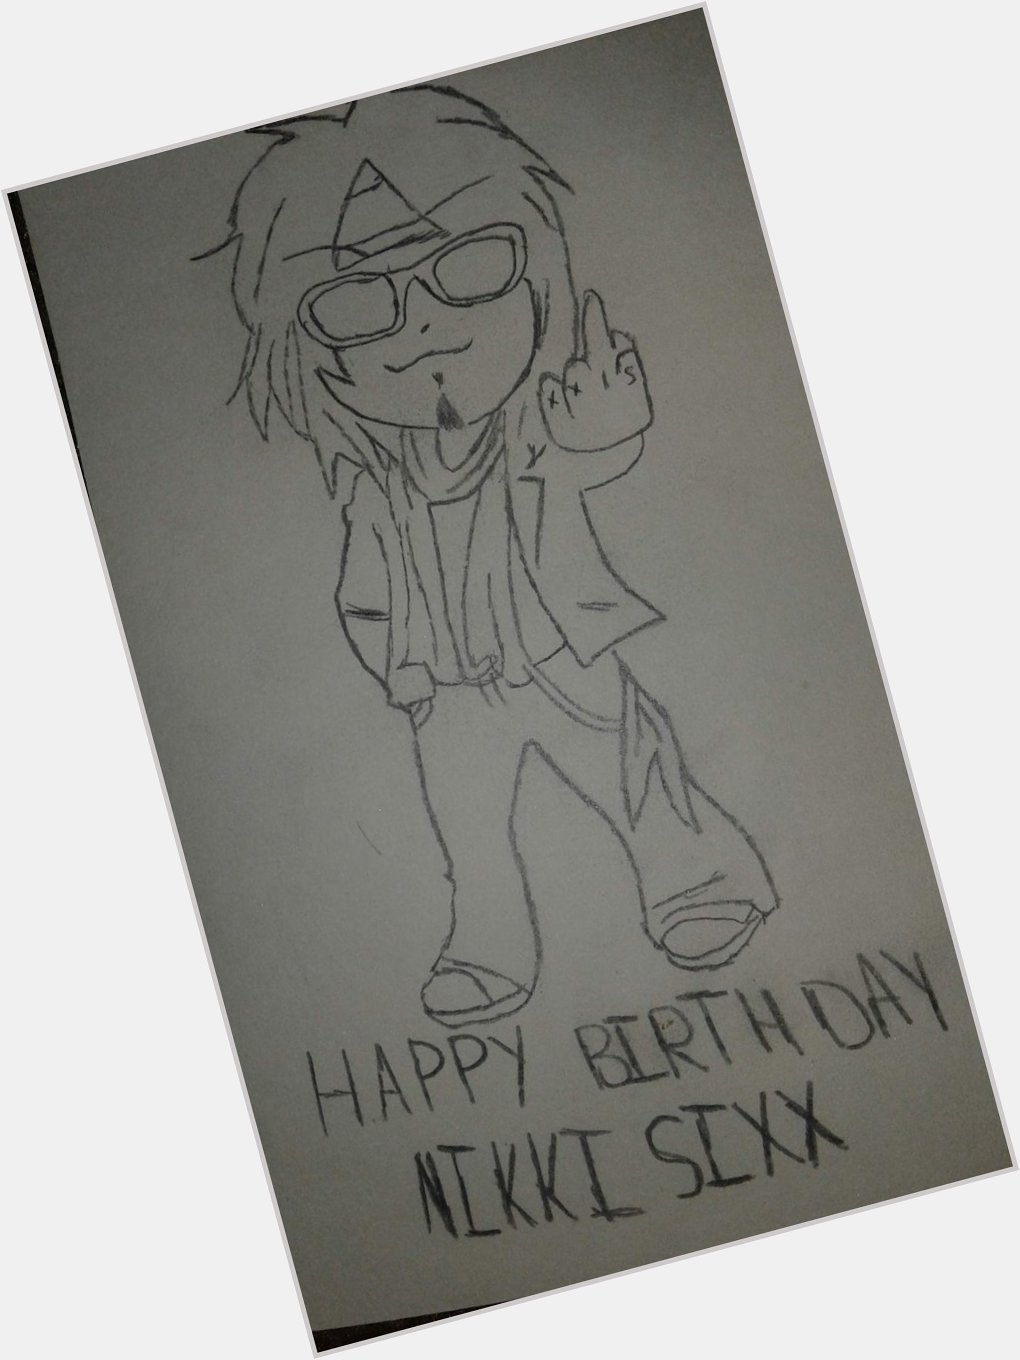  Happy Birthday Nikki Sixx!! I hope you have the greatest day ever!!! 